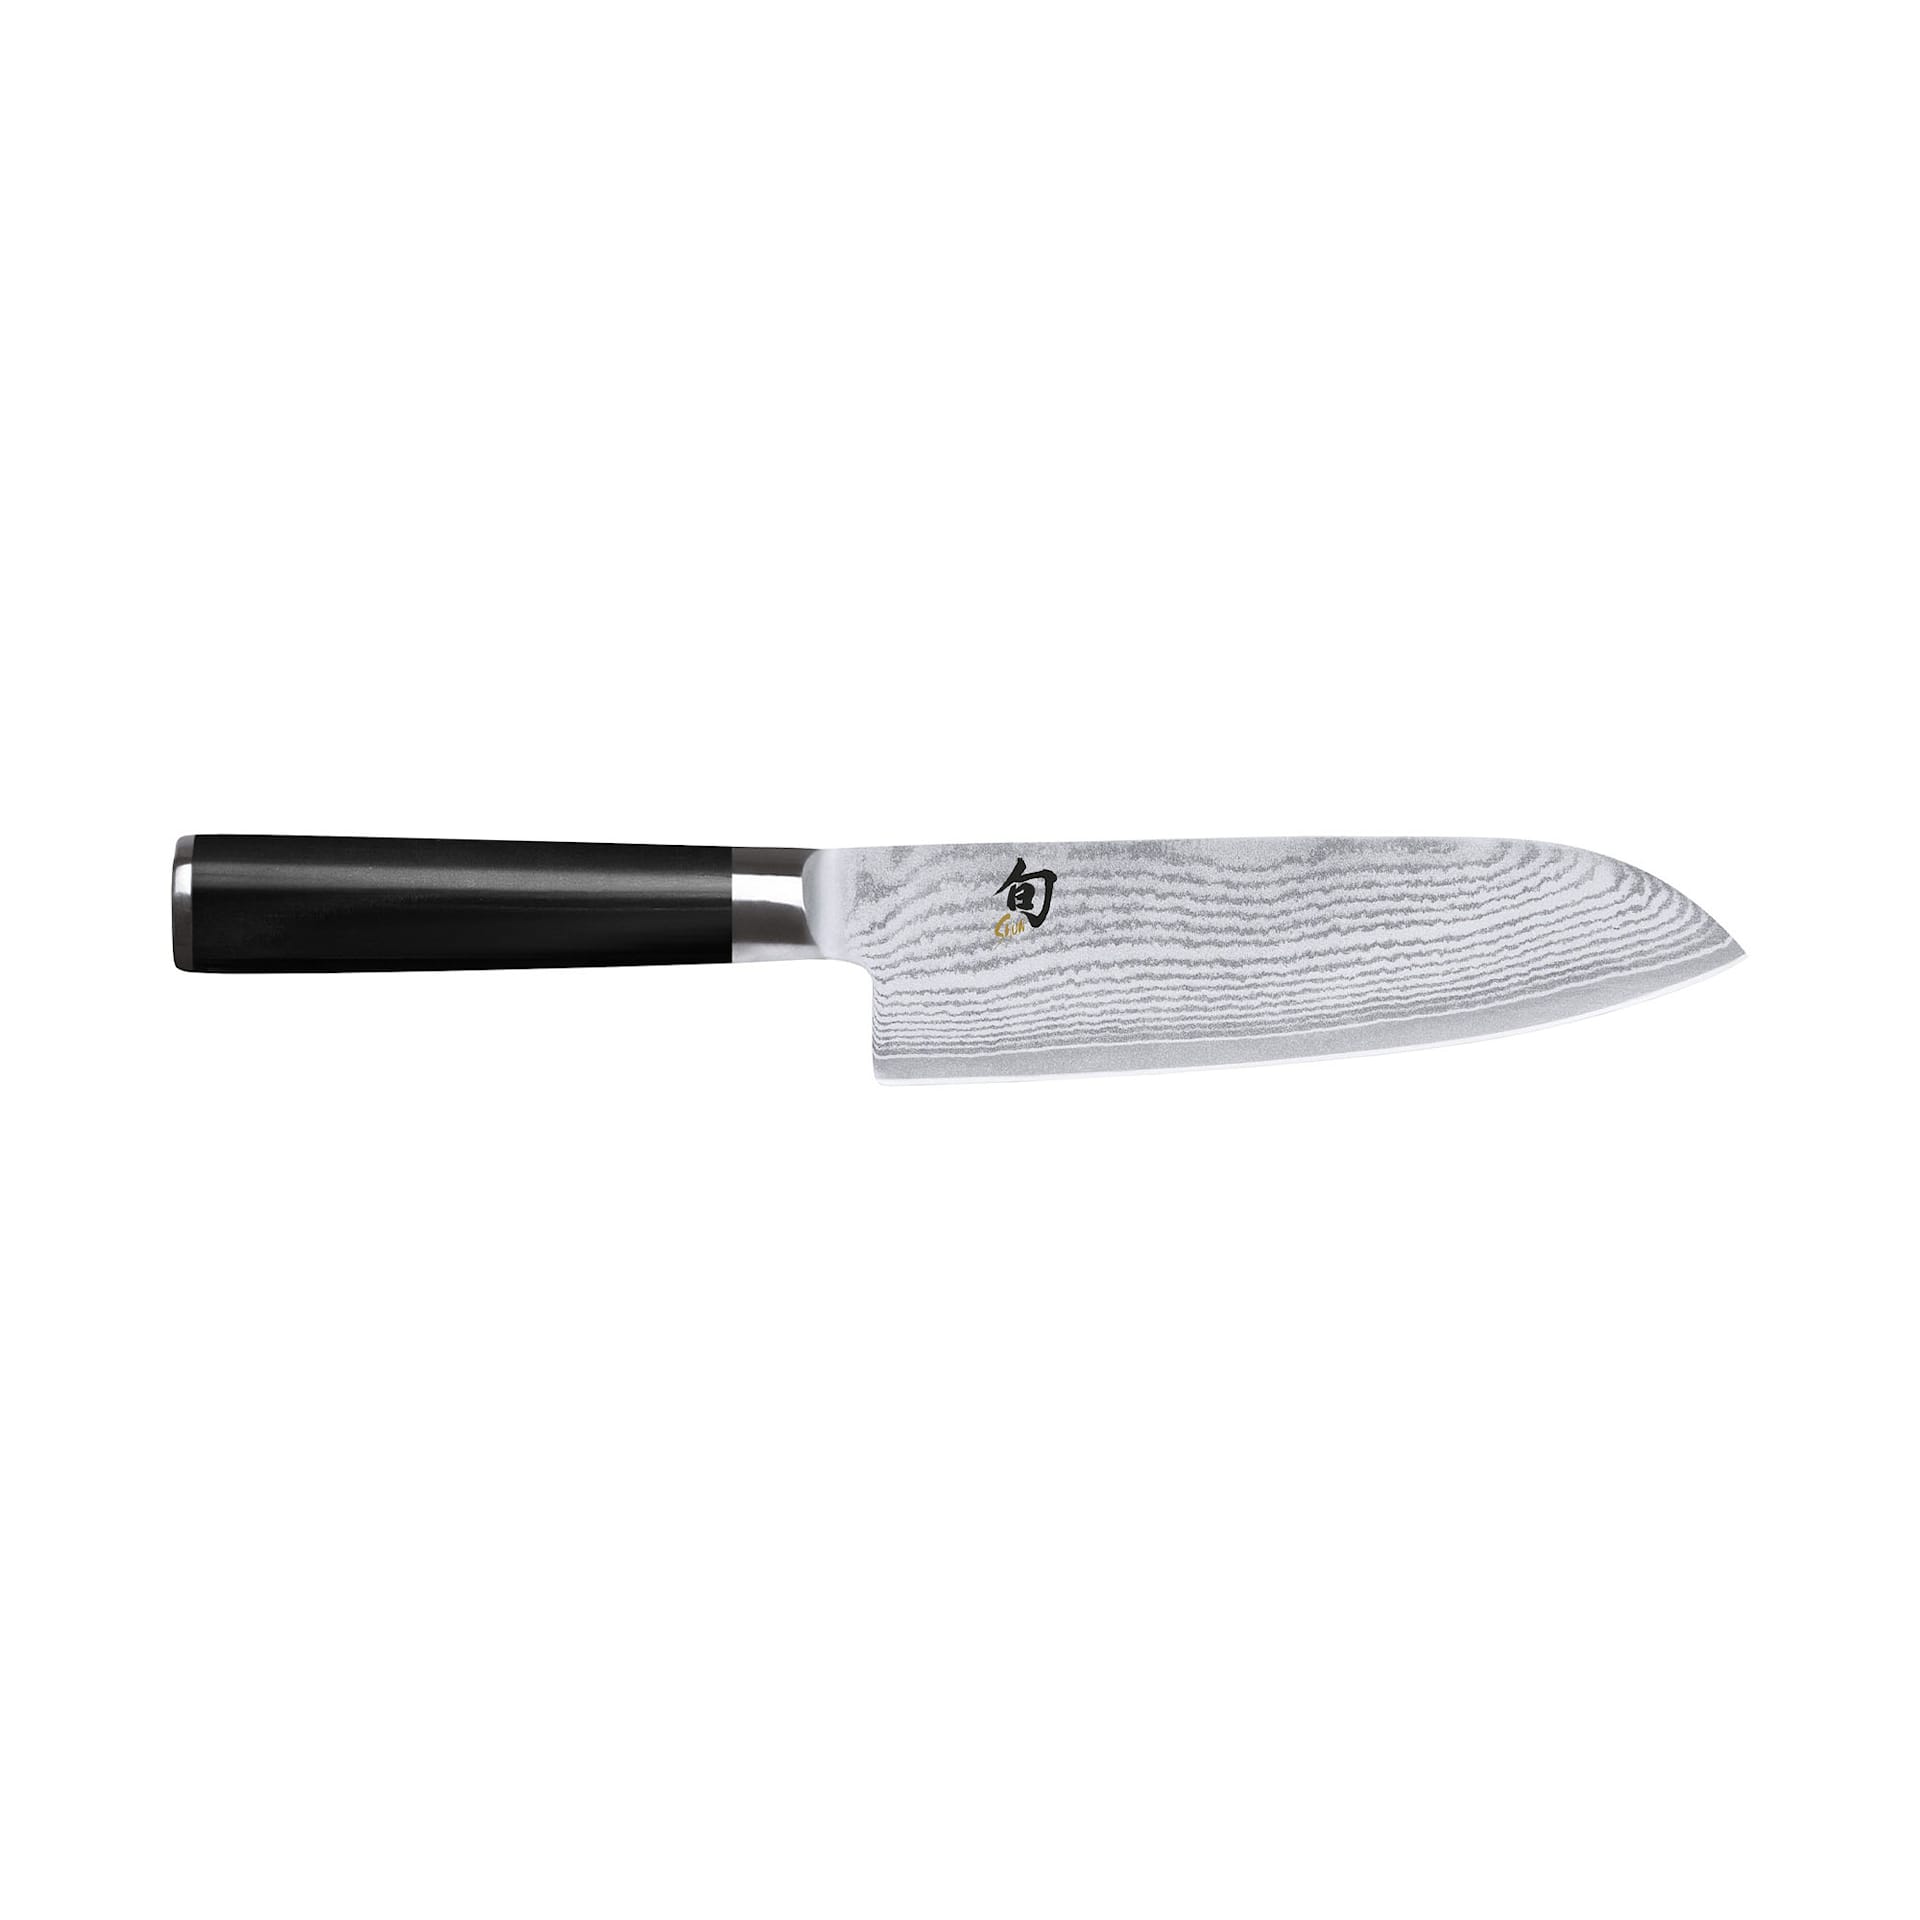 SHUN CLASSIC Santoku knife 18 cm Black handle - KAI - NO GA